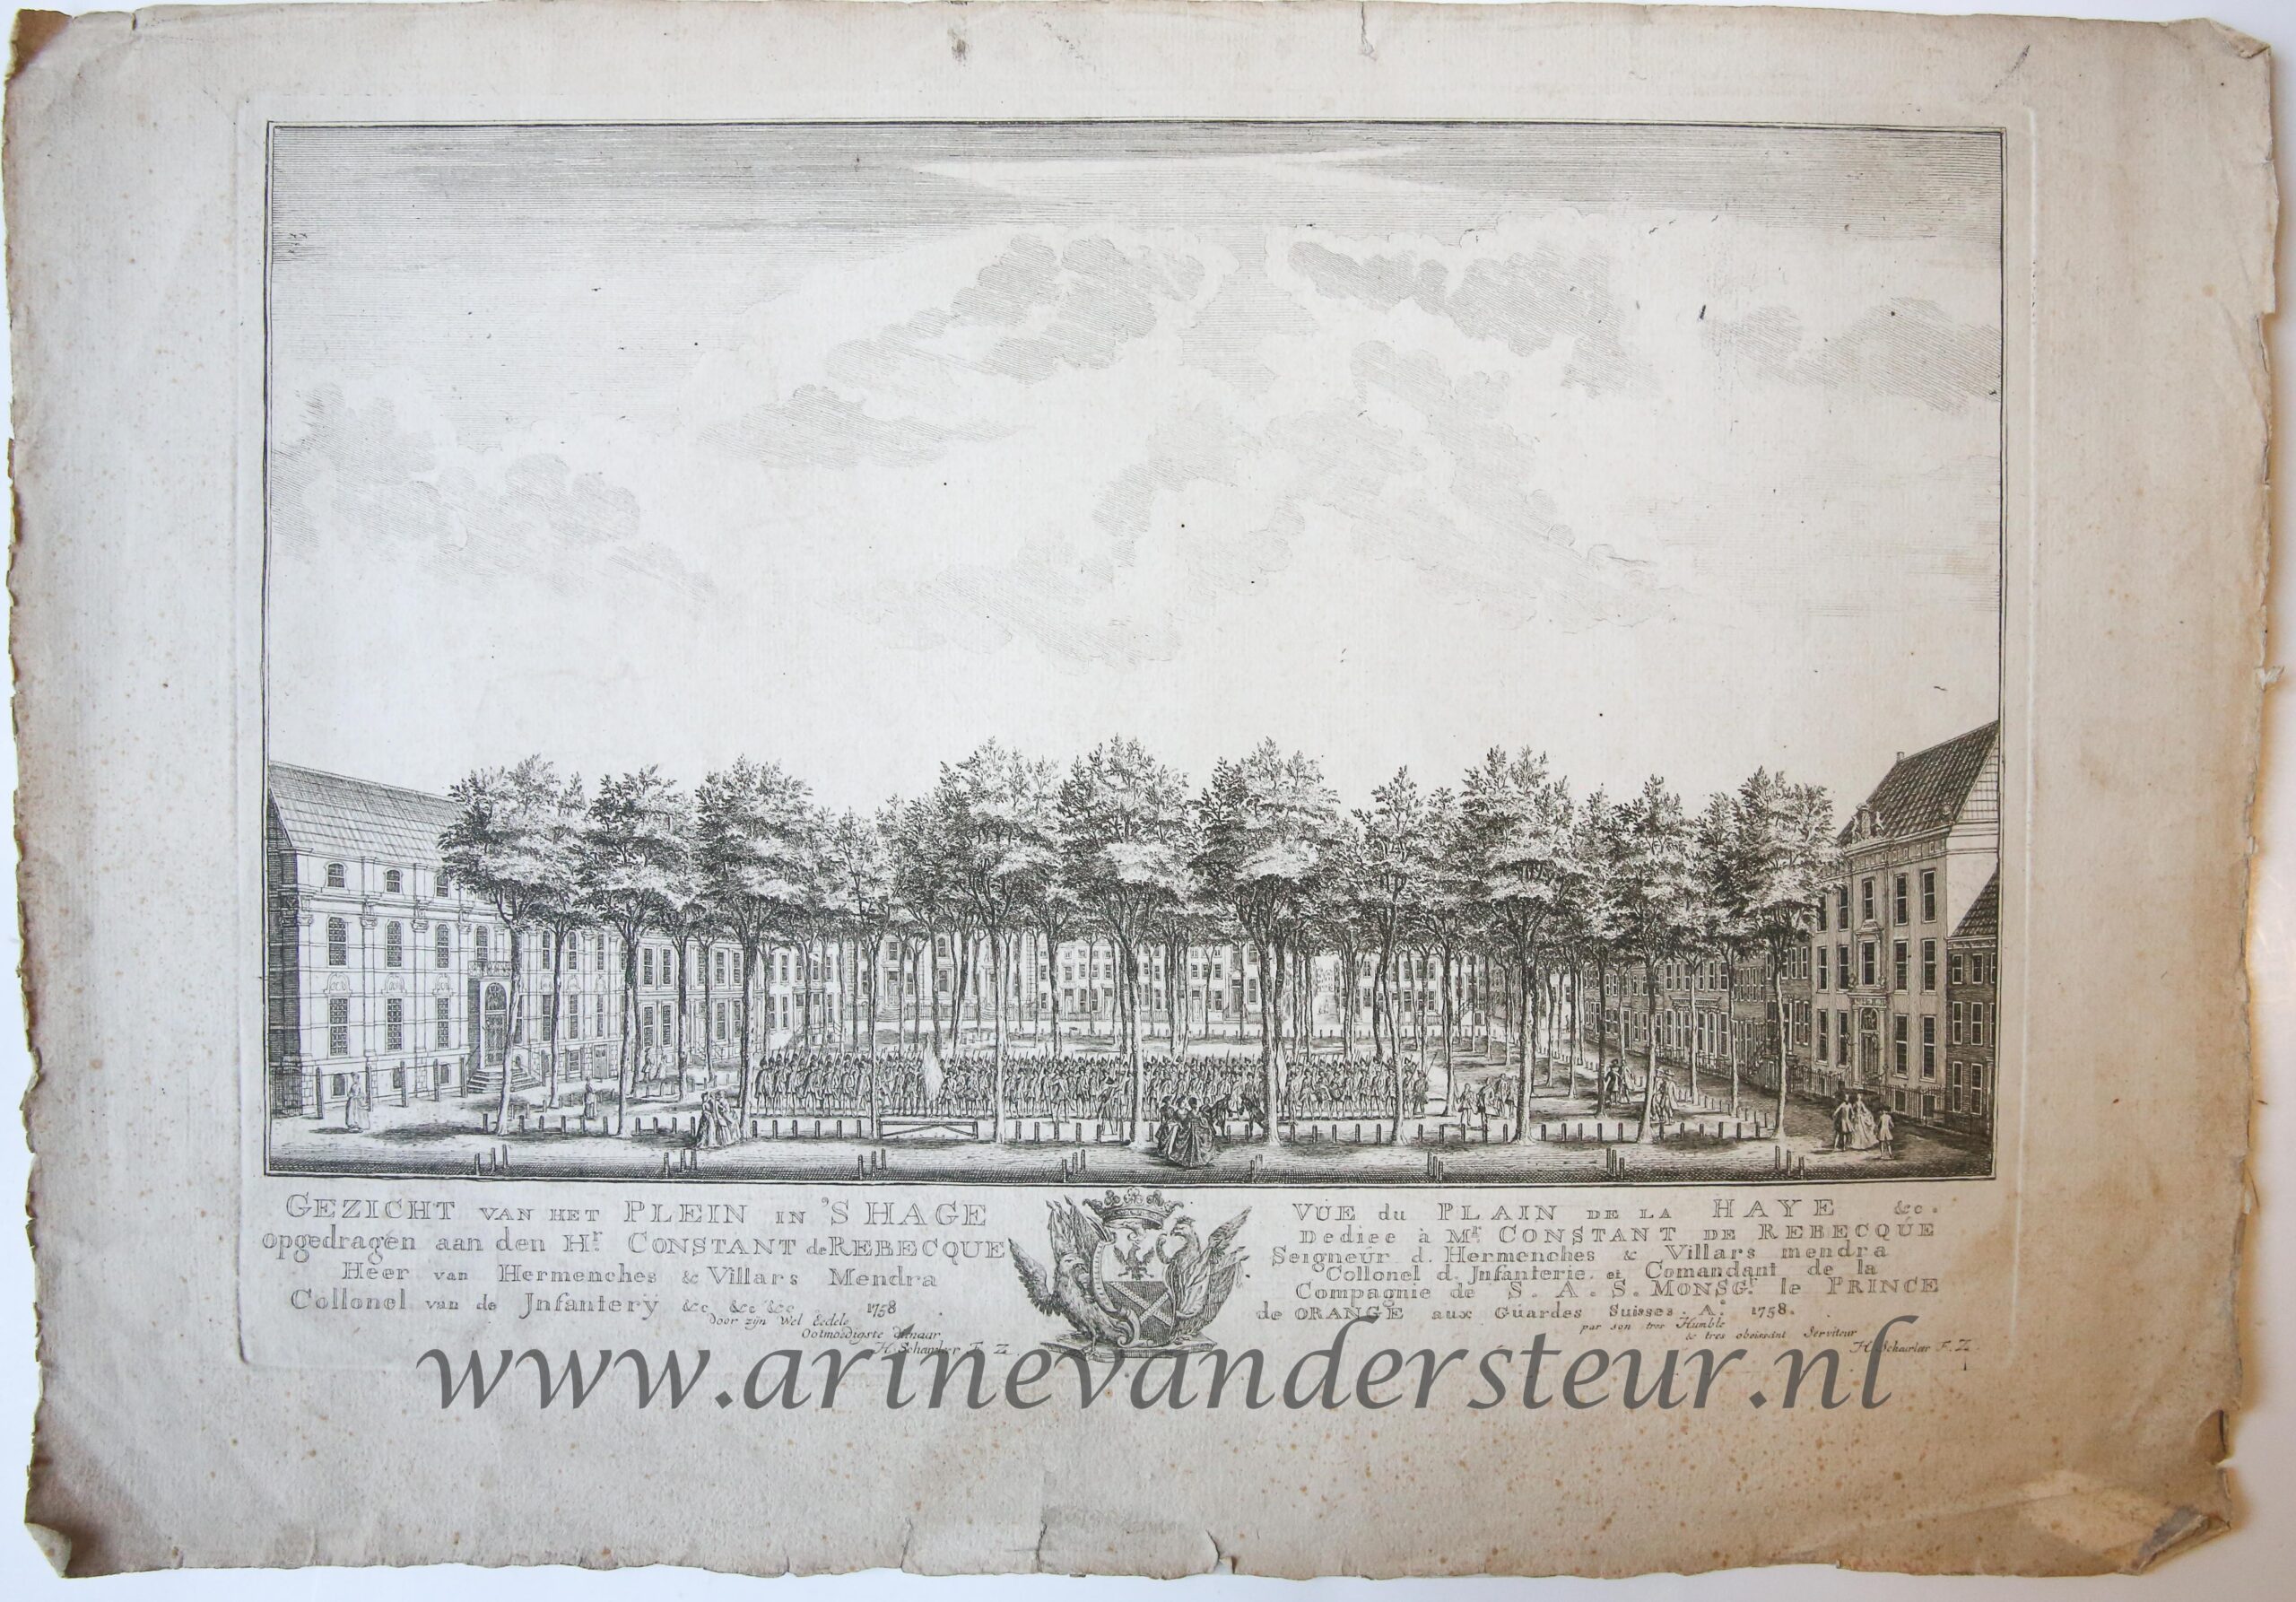 [Antique print, etching] GEZICHT VAN HET PLEIN IN 'S HAGE. Published 1758.